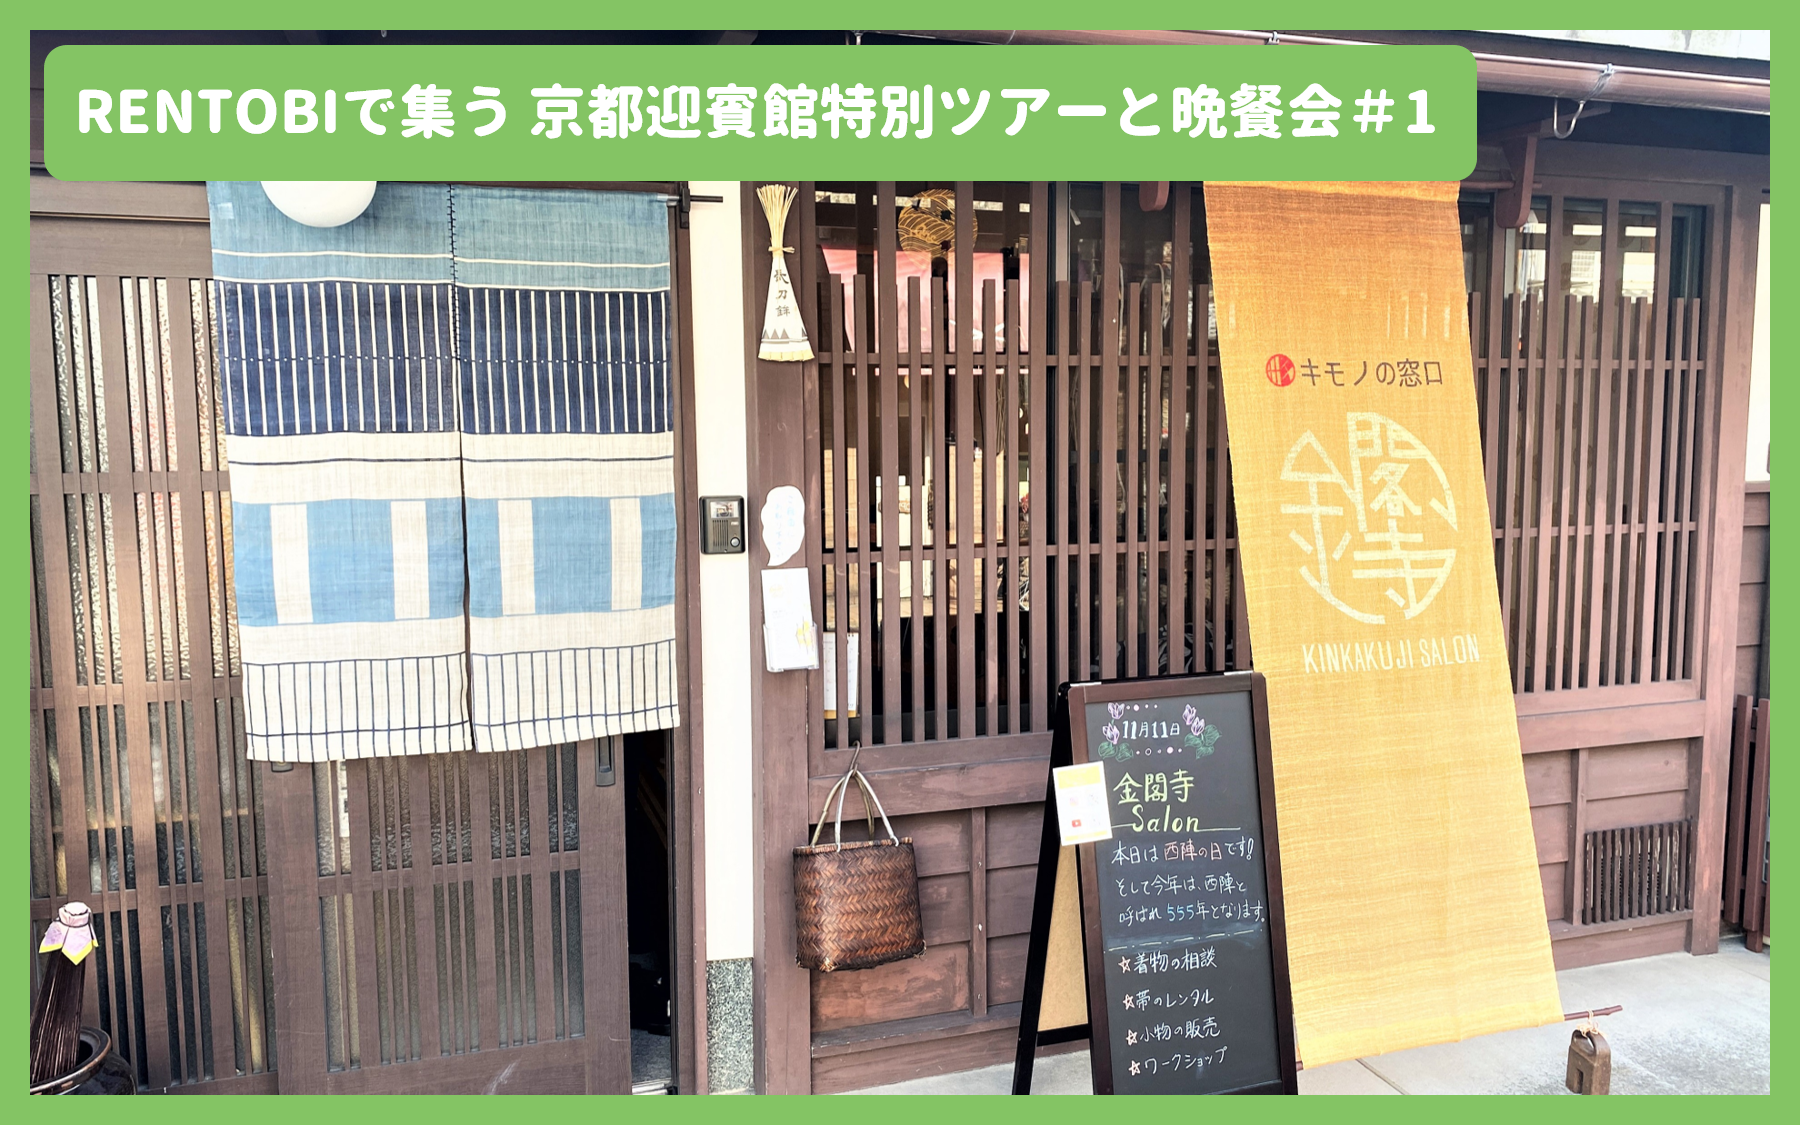 『RENTOBIで集う 京都迎賓館特別ツアーと晩餐会』が開催されました！#1